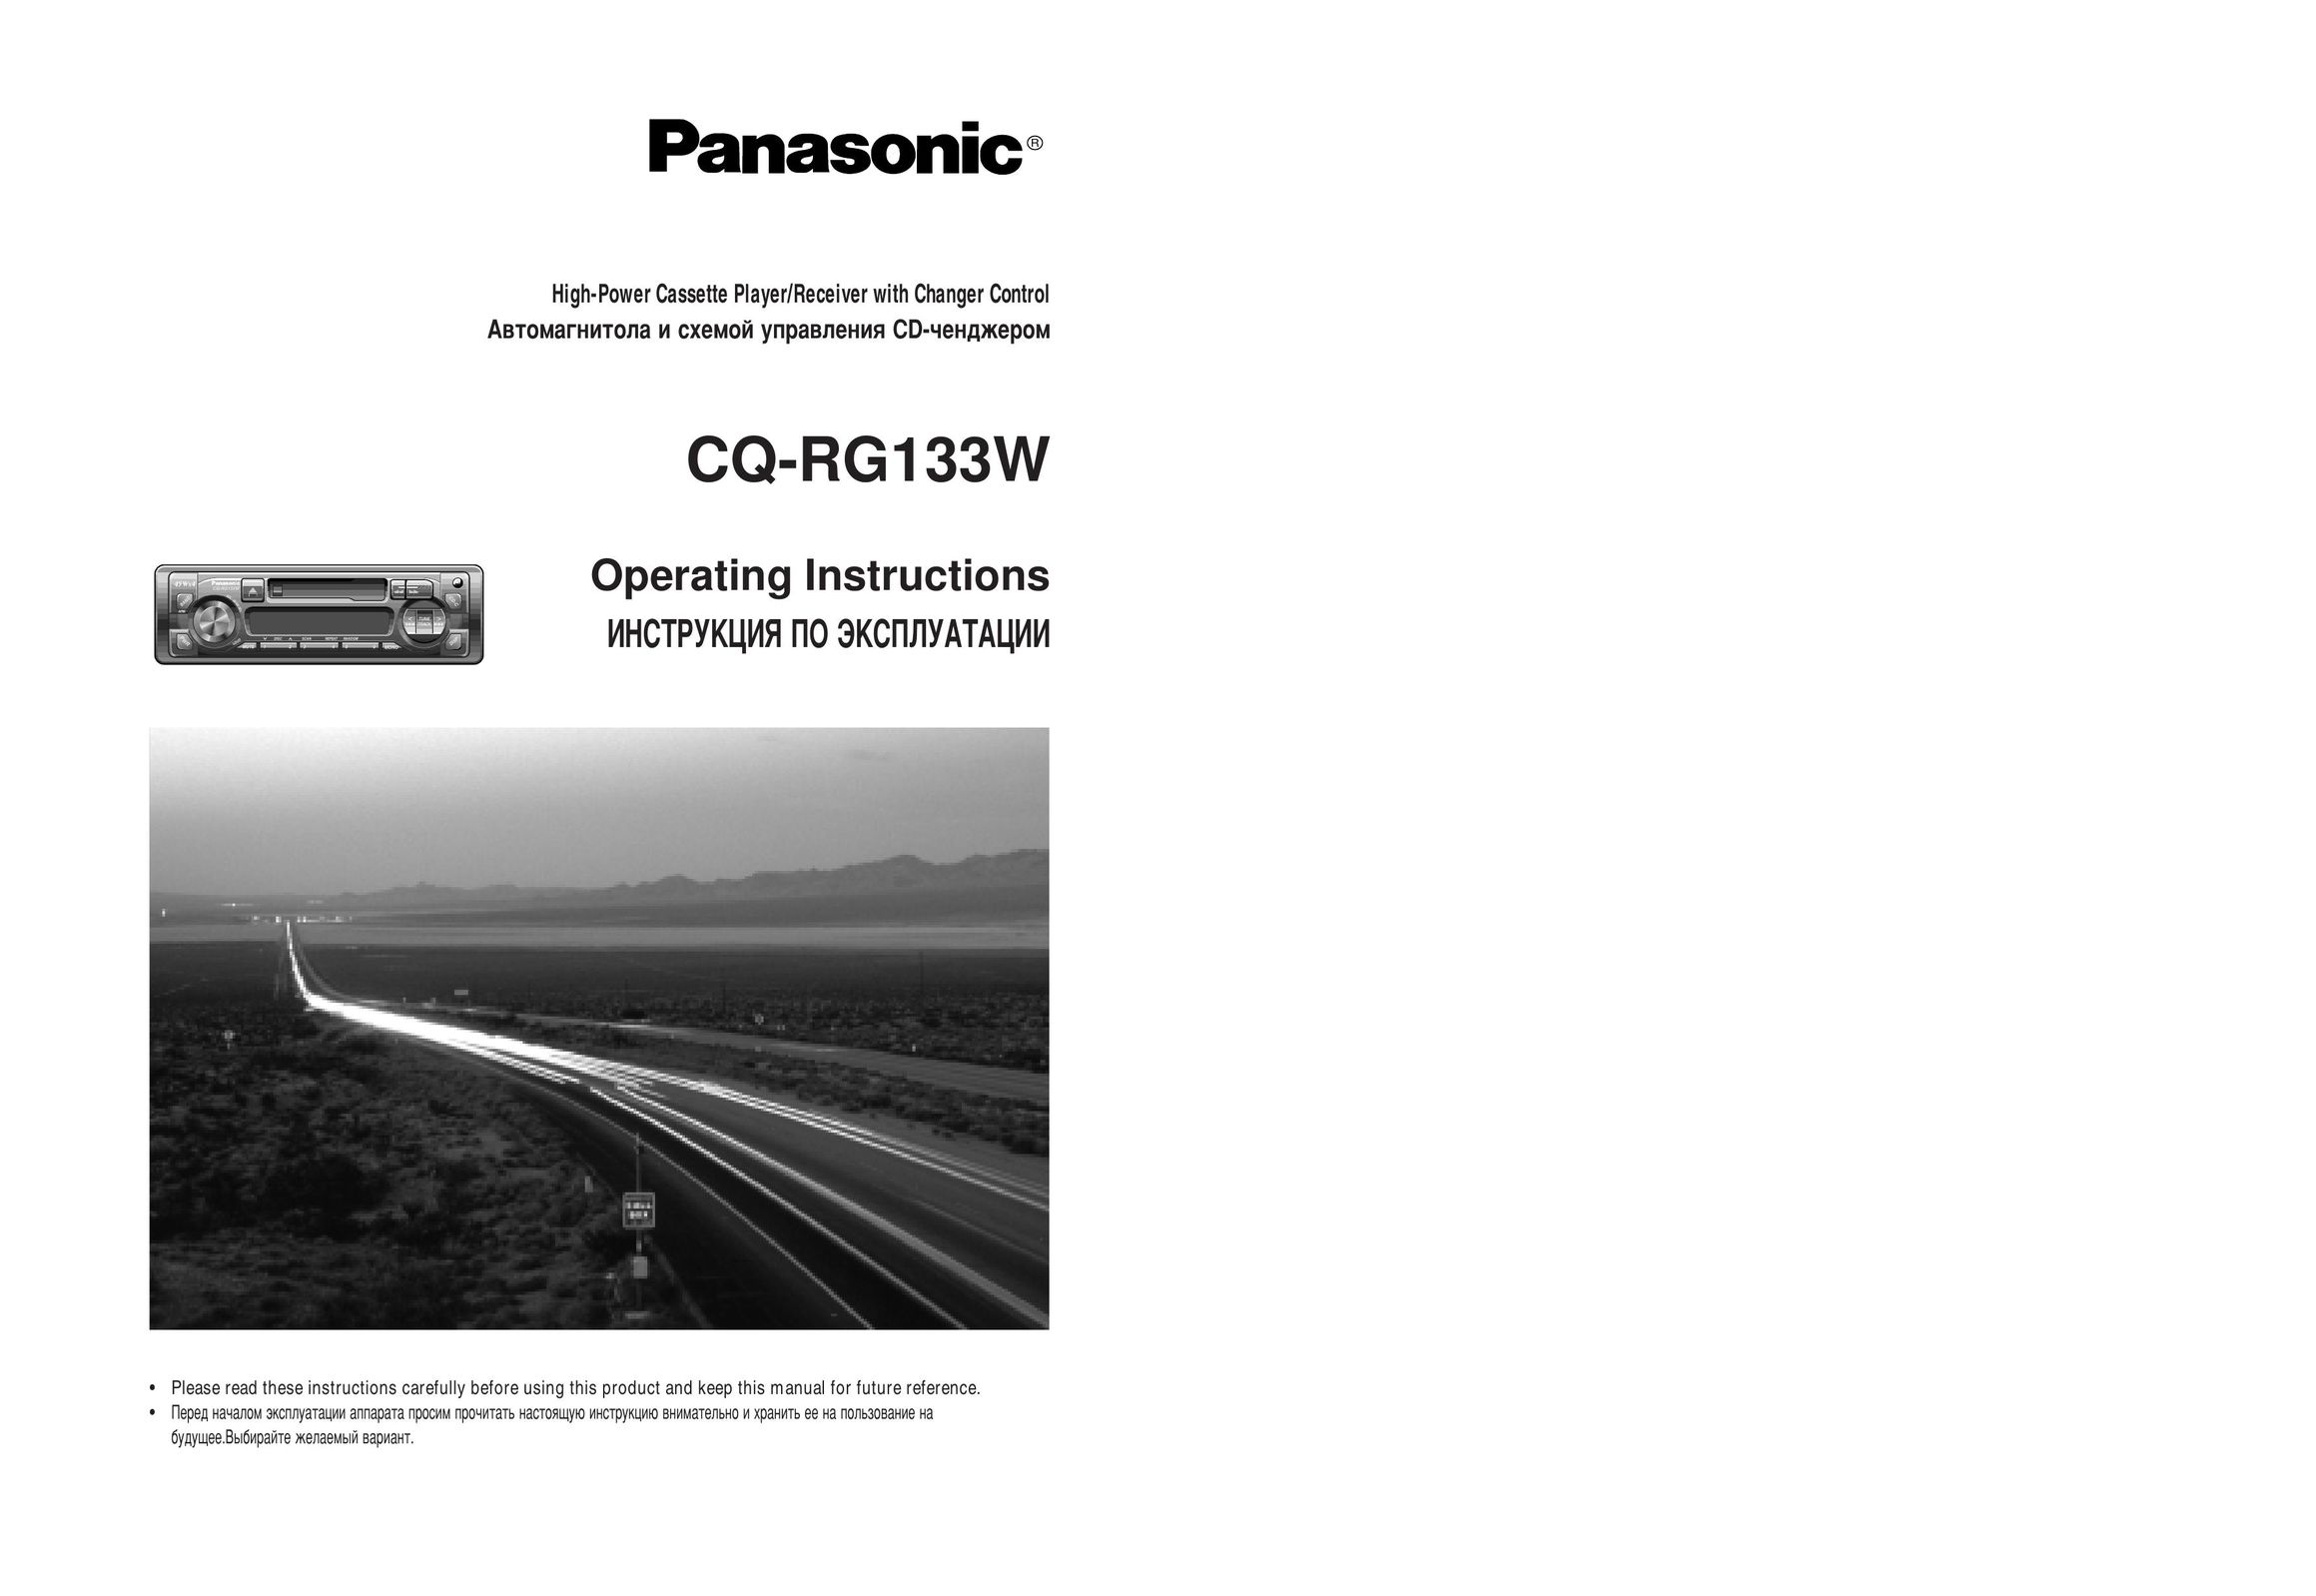 Panasonic CQ-RG133W Cassette Player User Manual